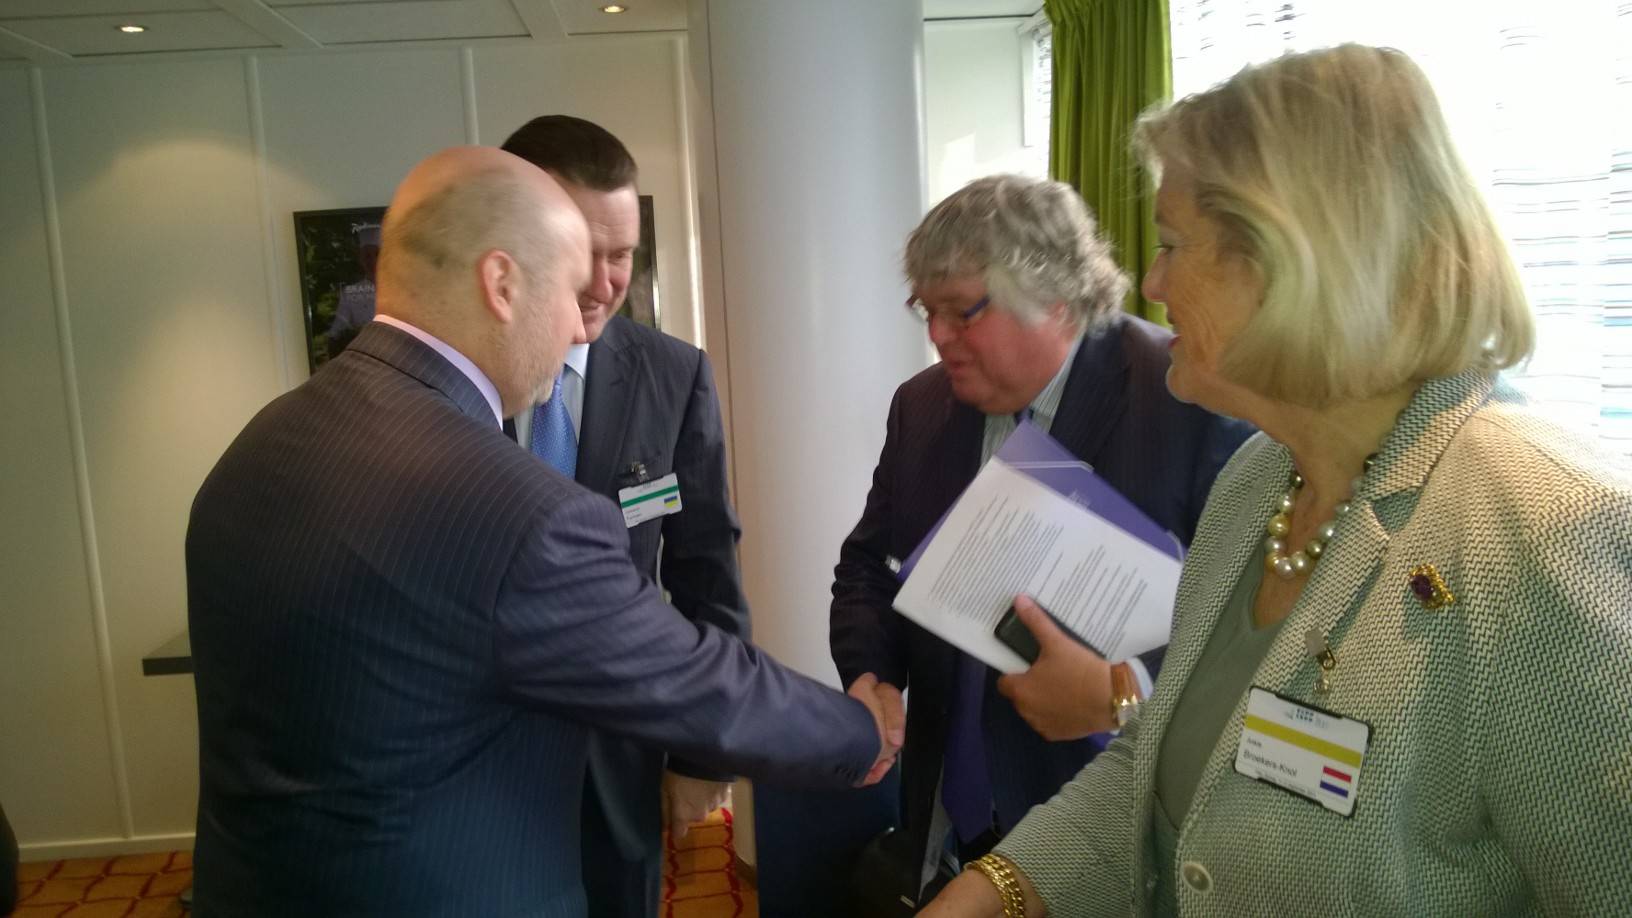 Kamervoorzitter Broekers-Knol en de voorzitter van het parlement van Oekraine Turchynov